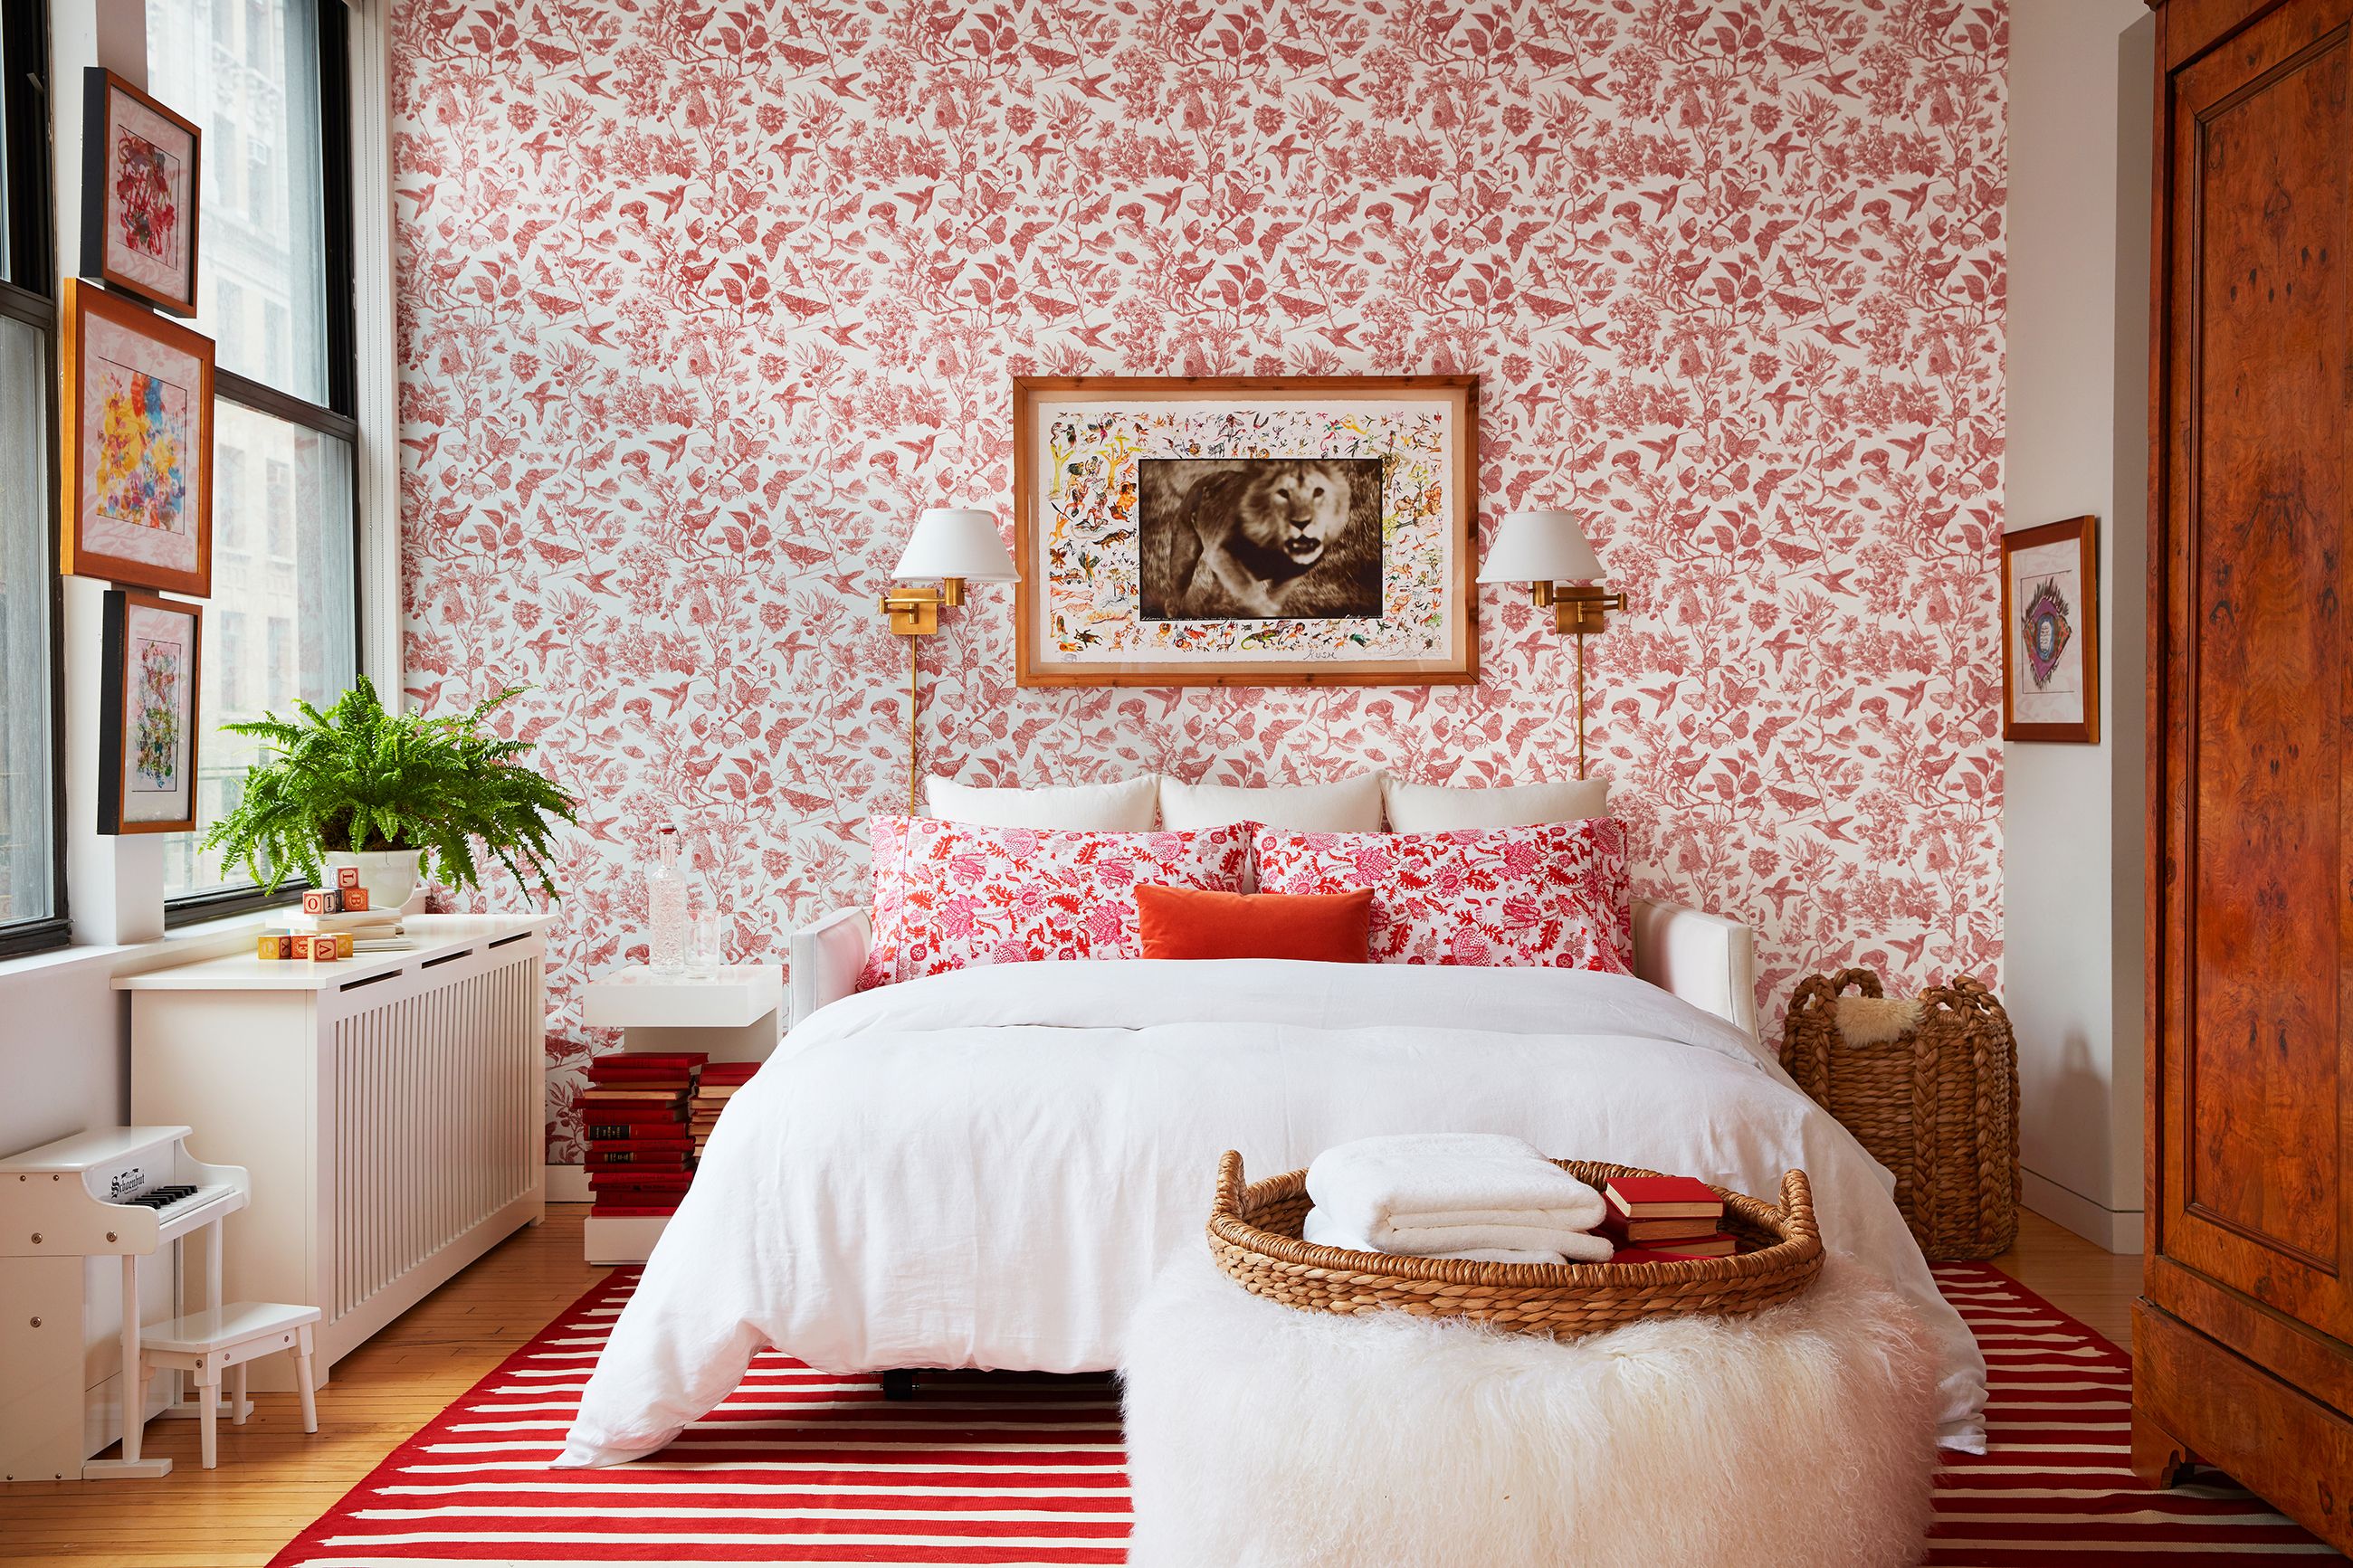 15 Romantic Bedroom Ideas - Sensual Bedroom Design Tips